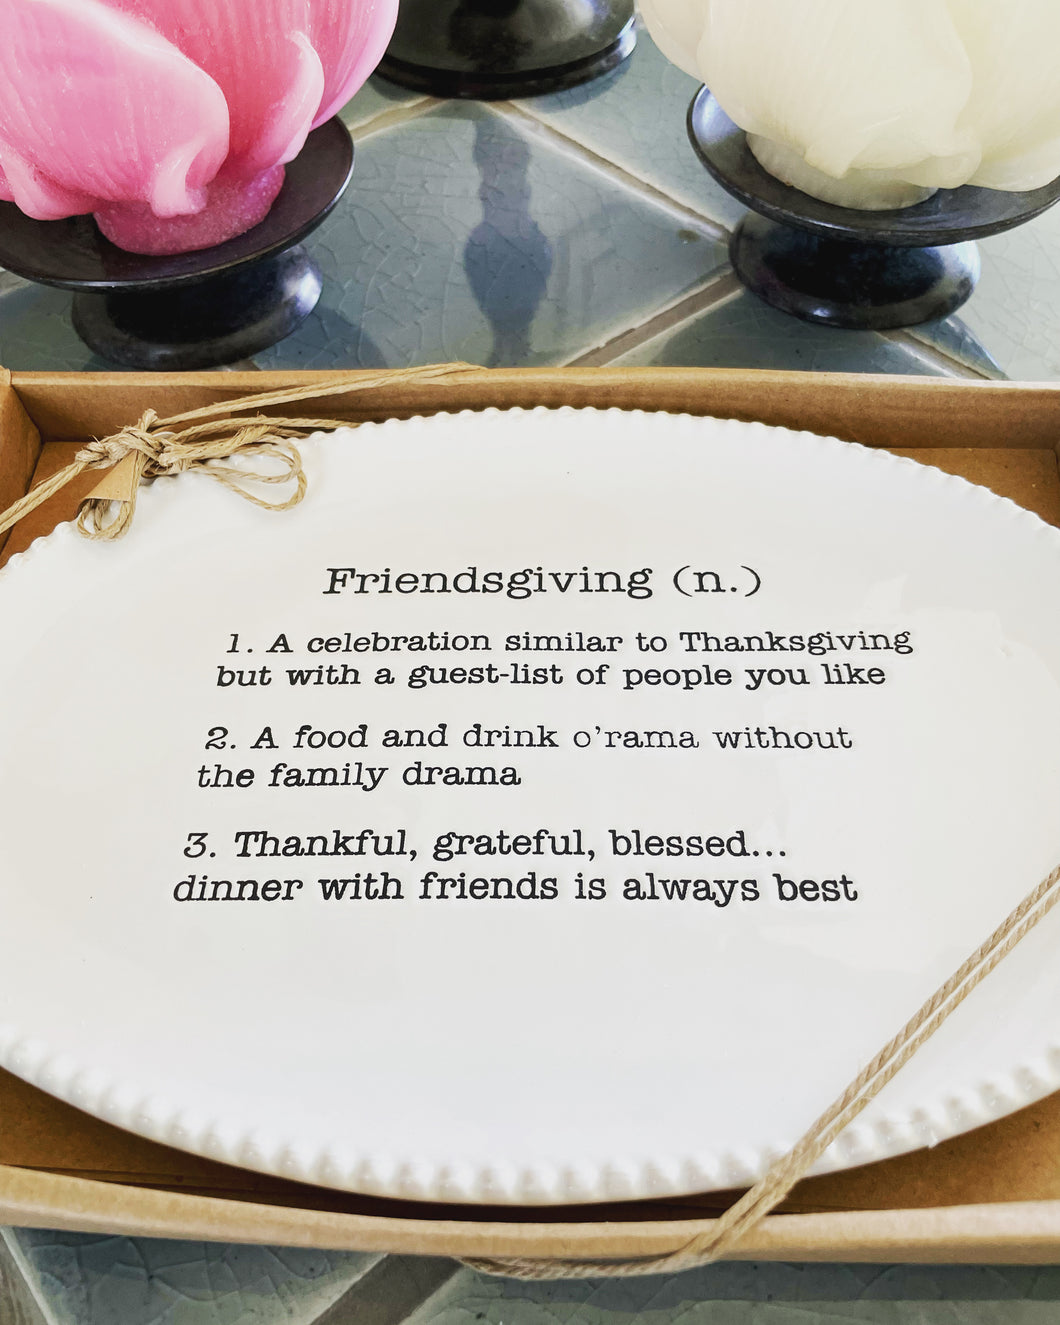 Friendsgiving Plate